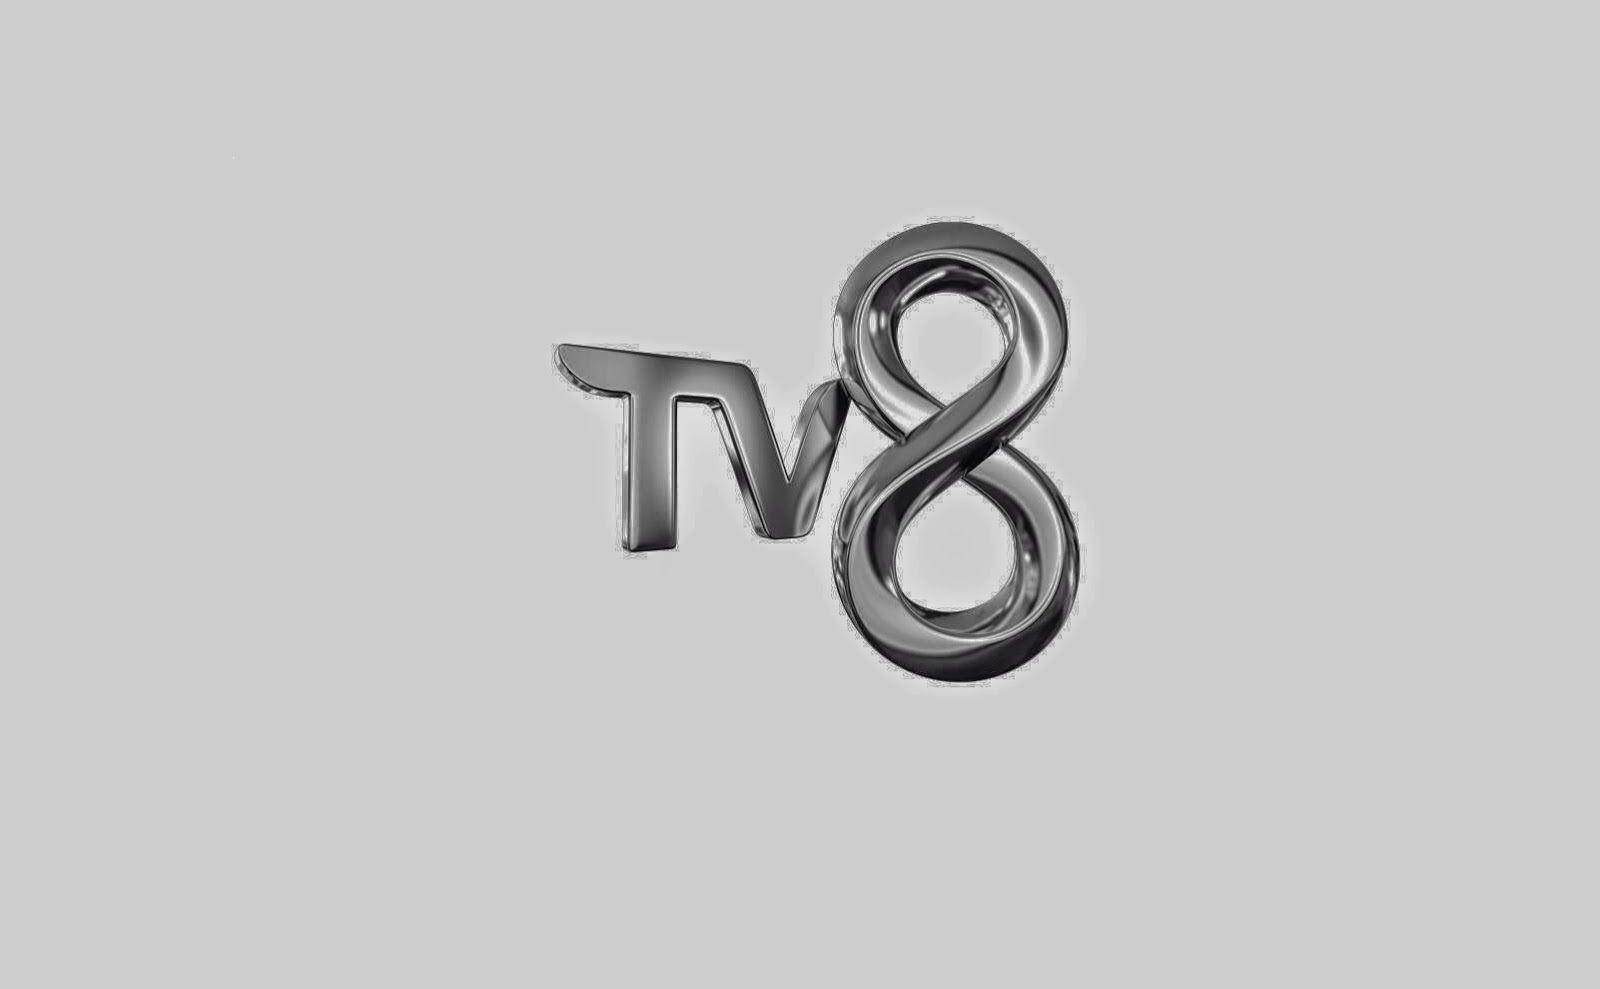 tv8.jpg